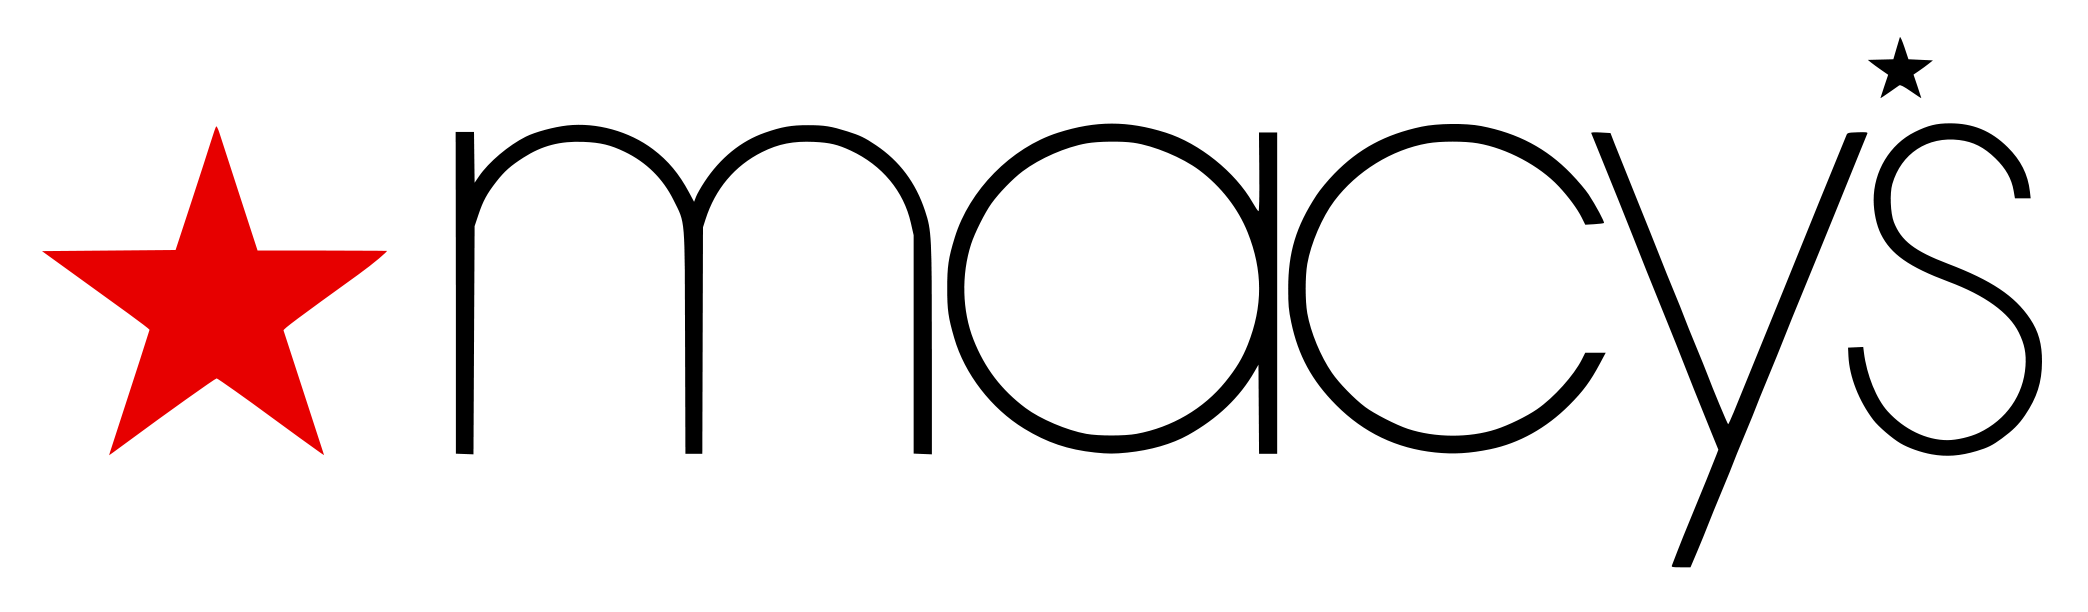 Macy’s Logo PNG Image